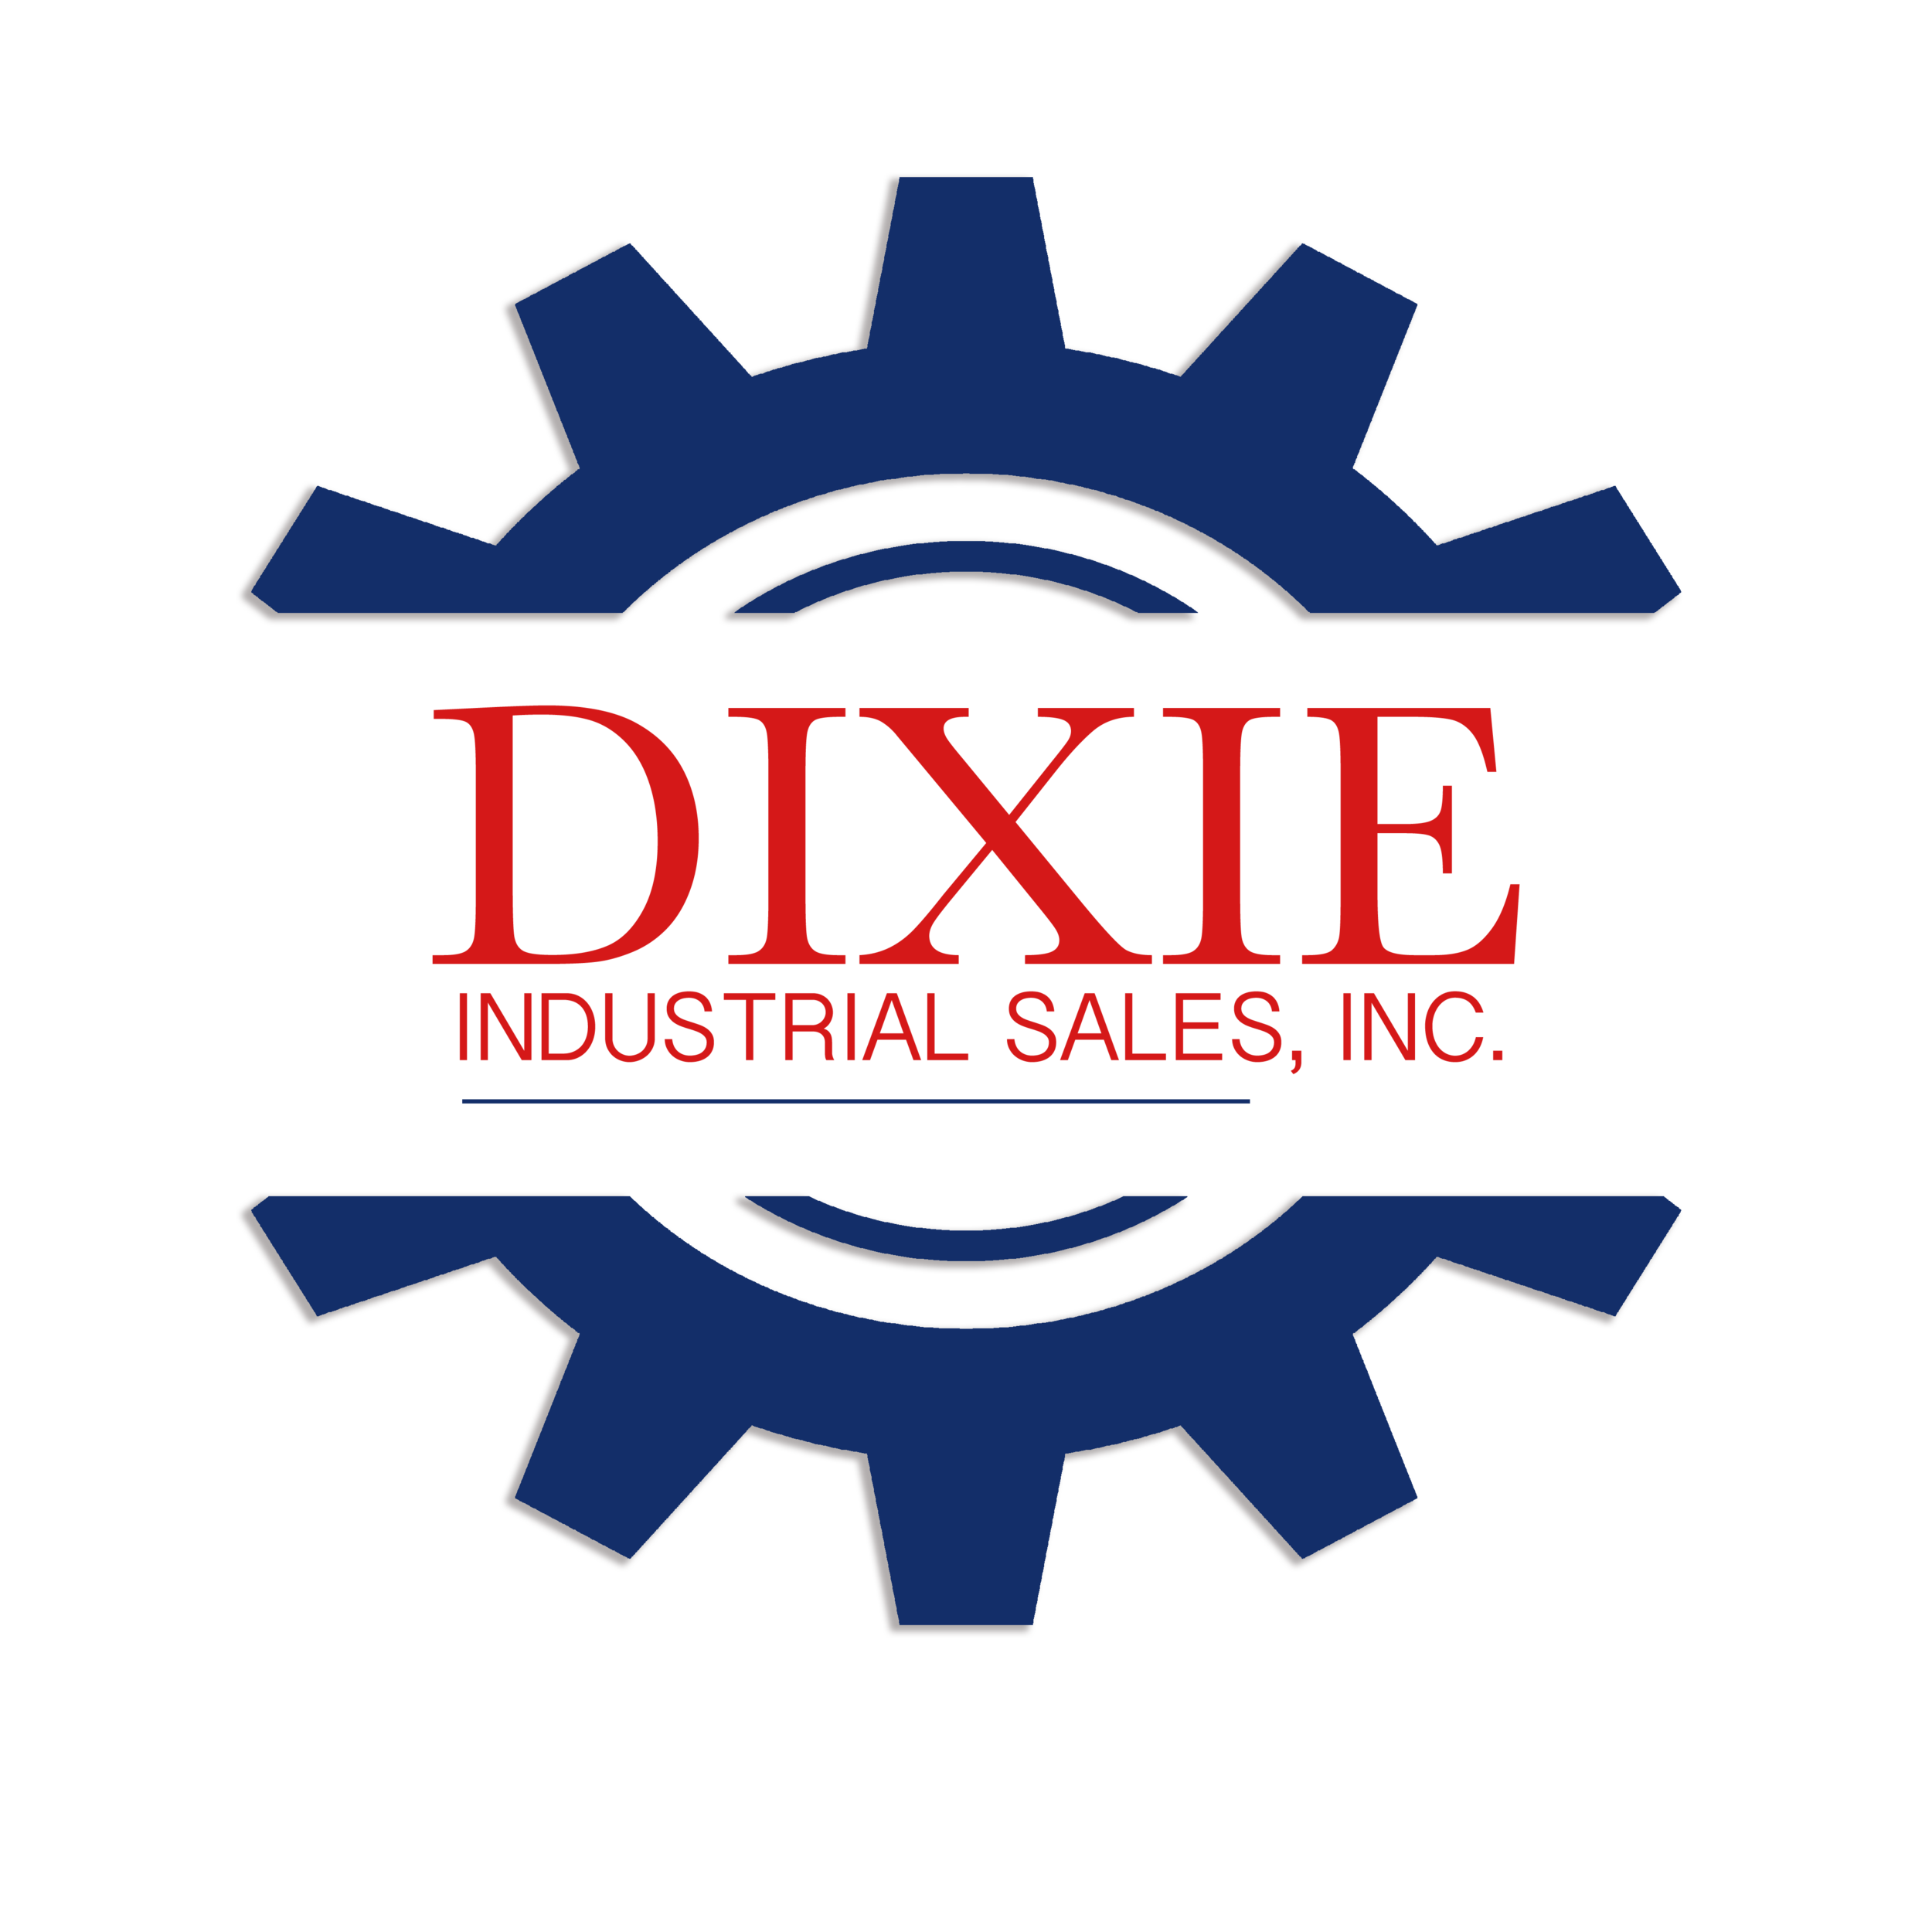 Dixie Industrial Sales